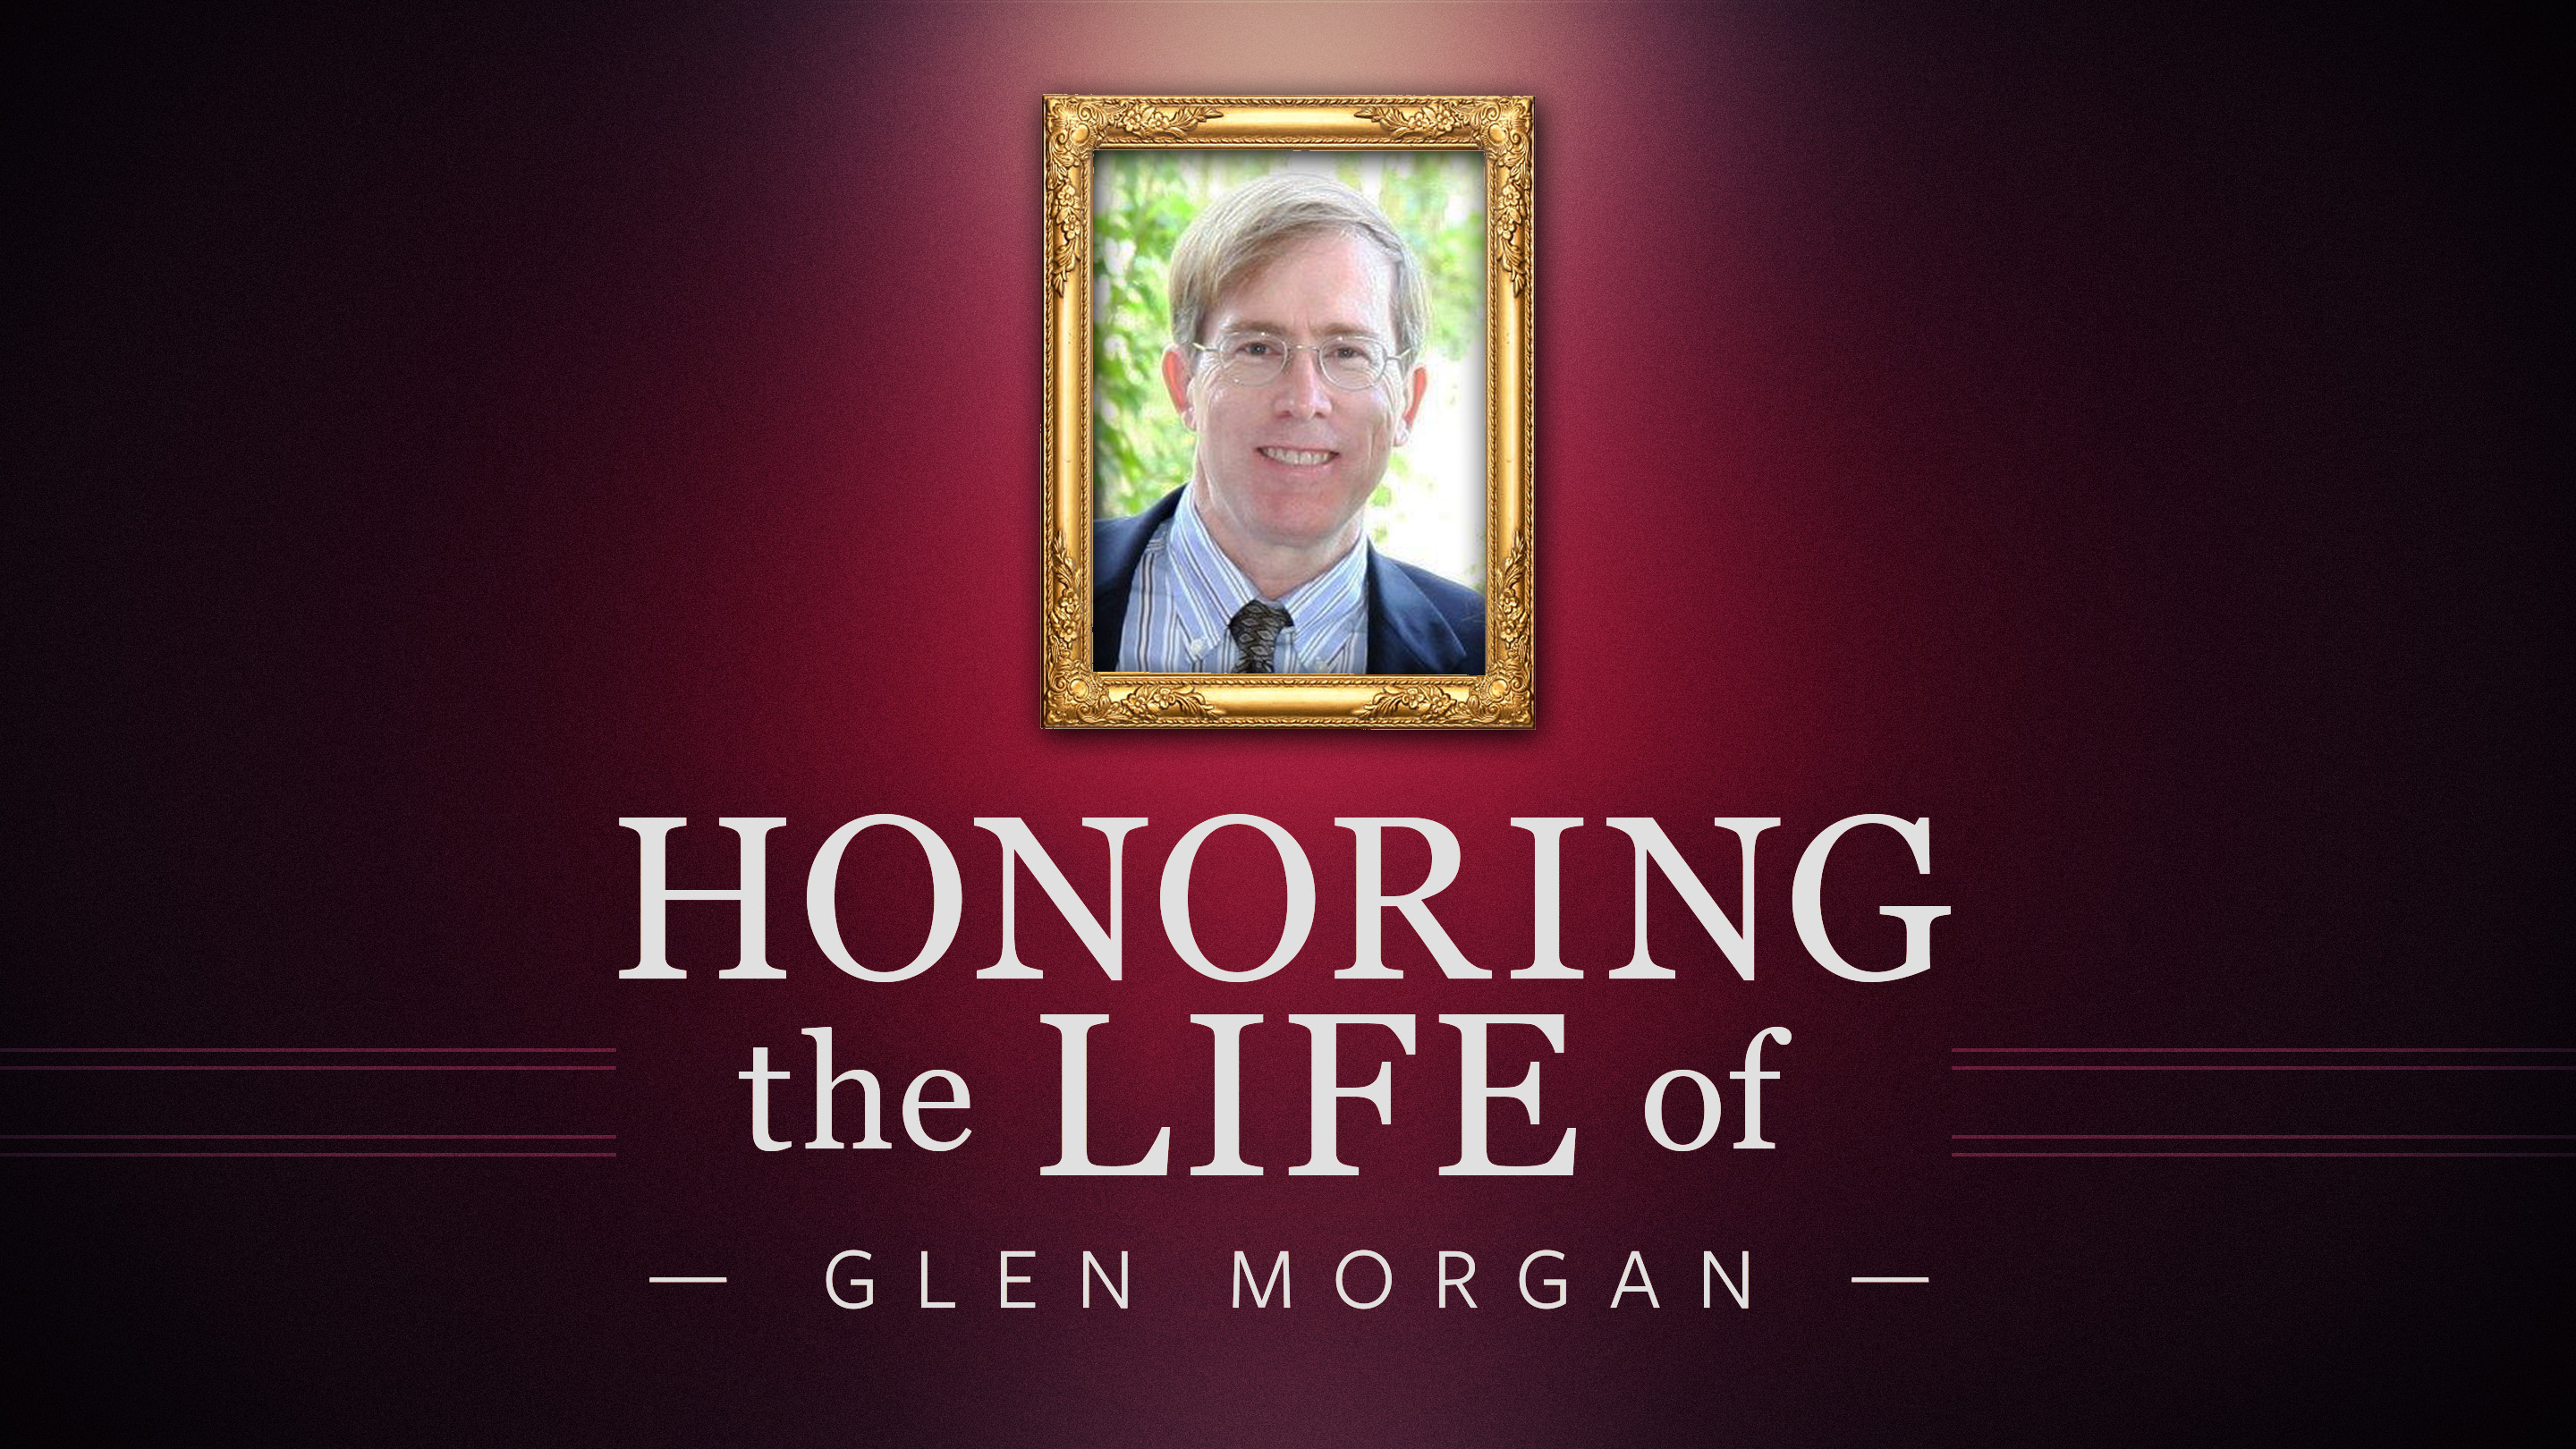 Glen Morgan's Memorial Service